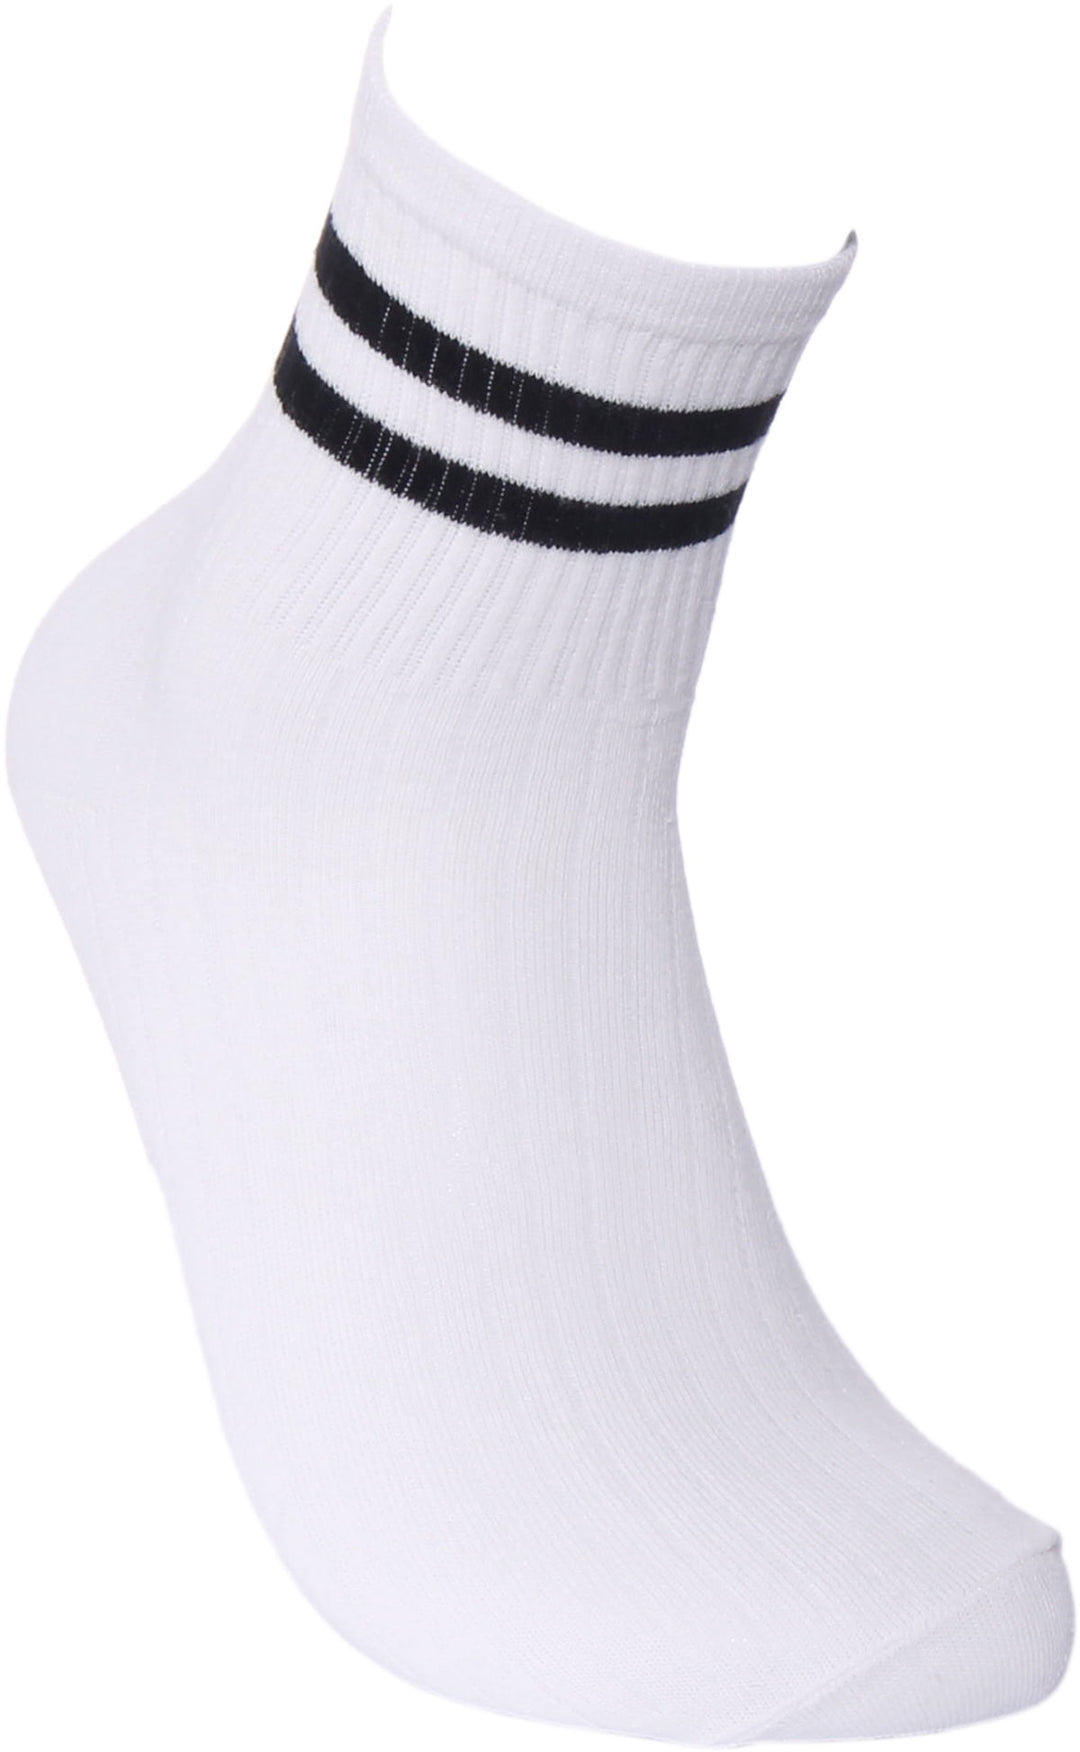 Justinreess England Stripe Socks In White Black For Men